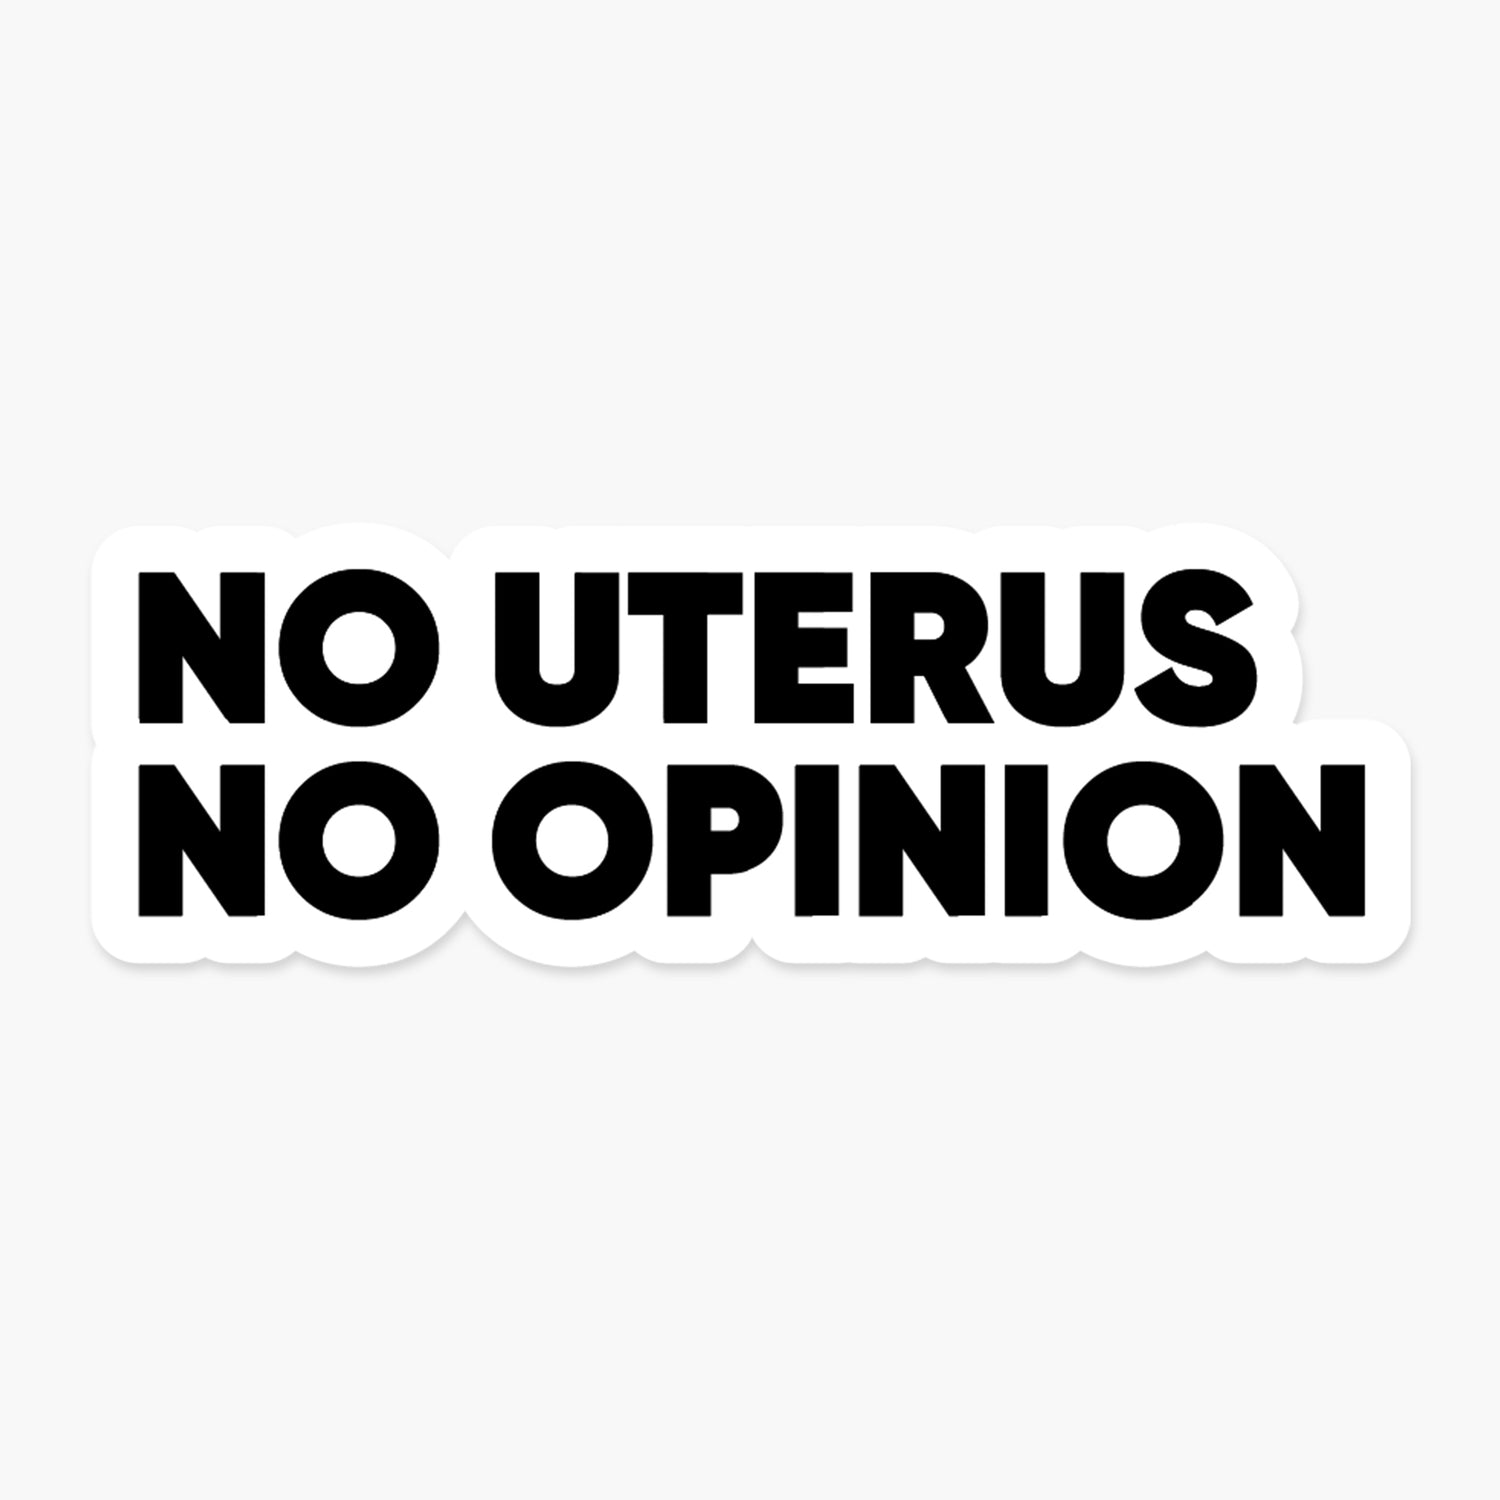 No Uterus No Opinion - Feminist Sticker | Footnotes Paper